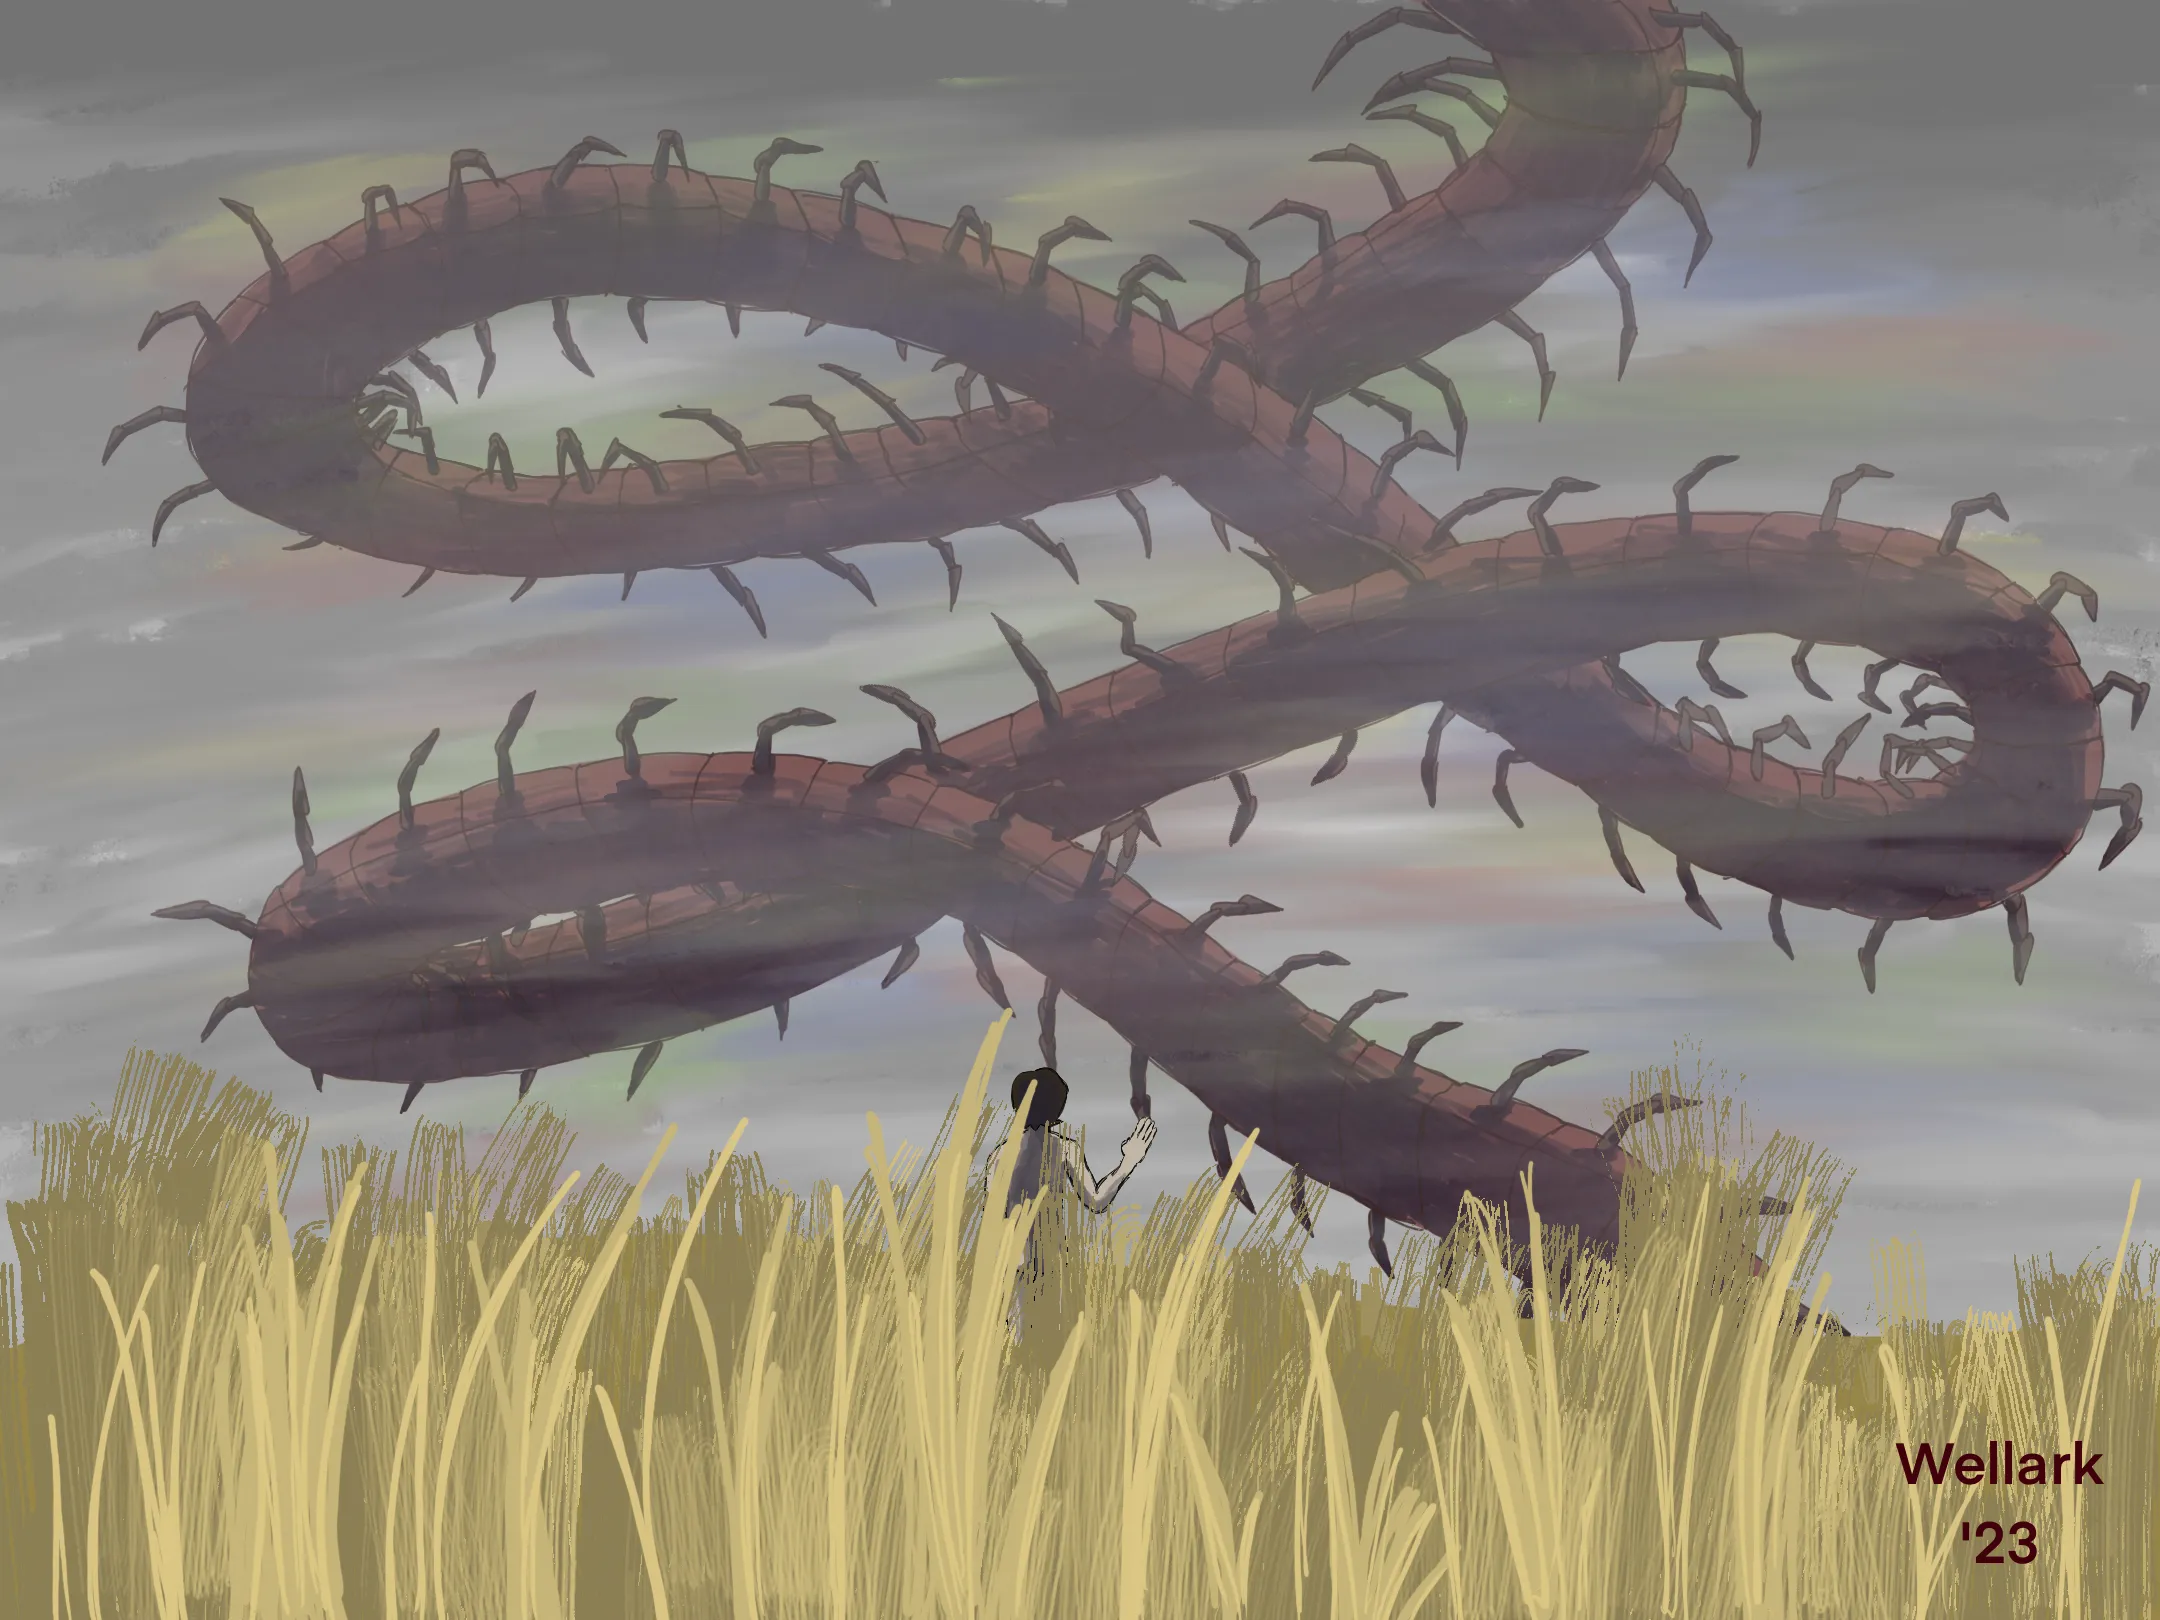 The eternal centipede weaving through the sky